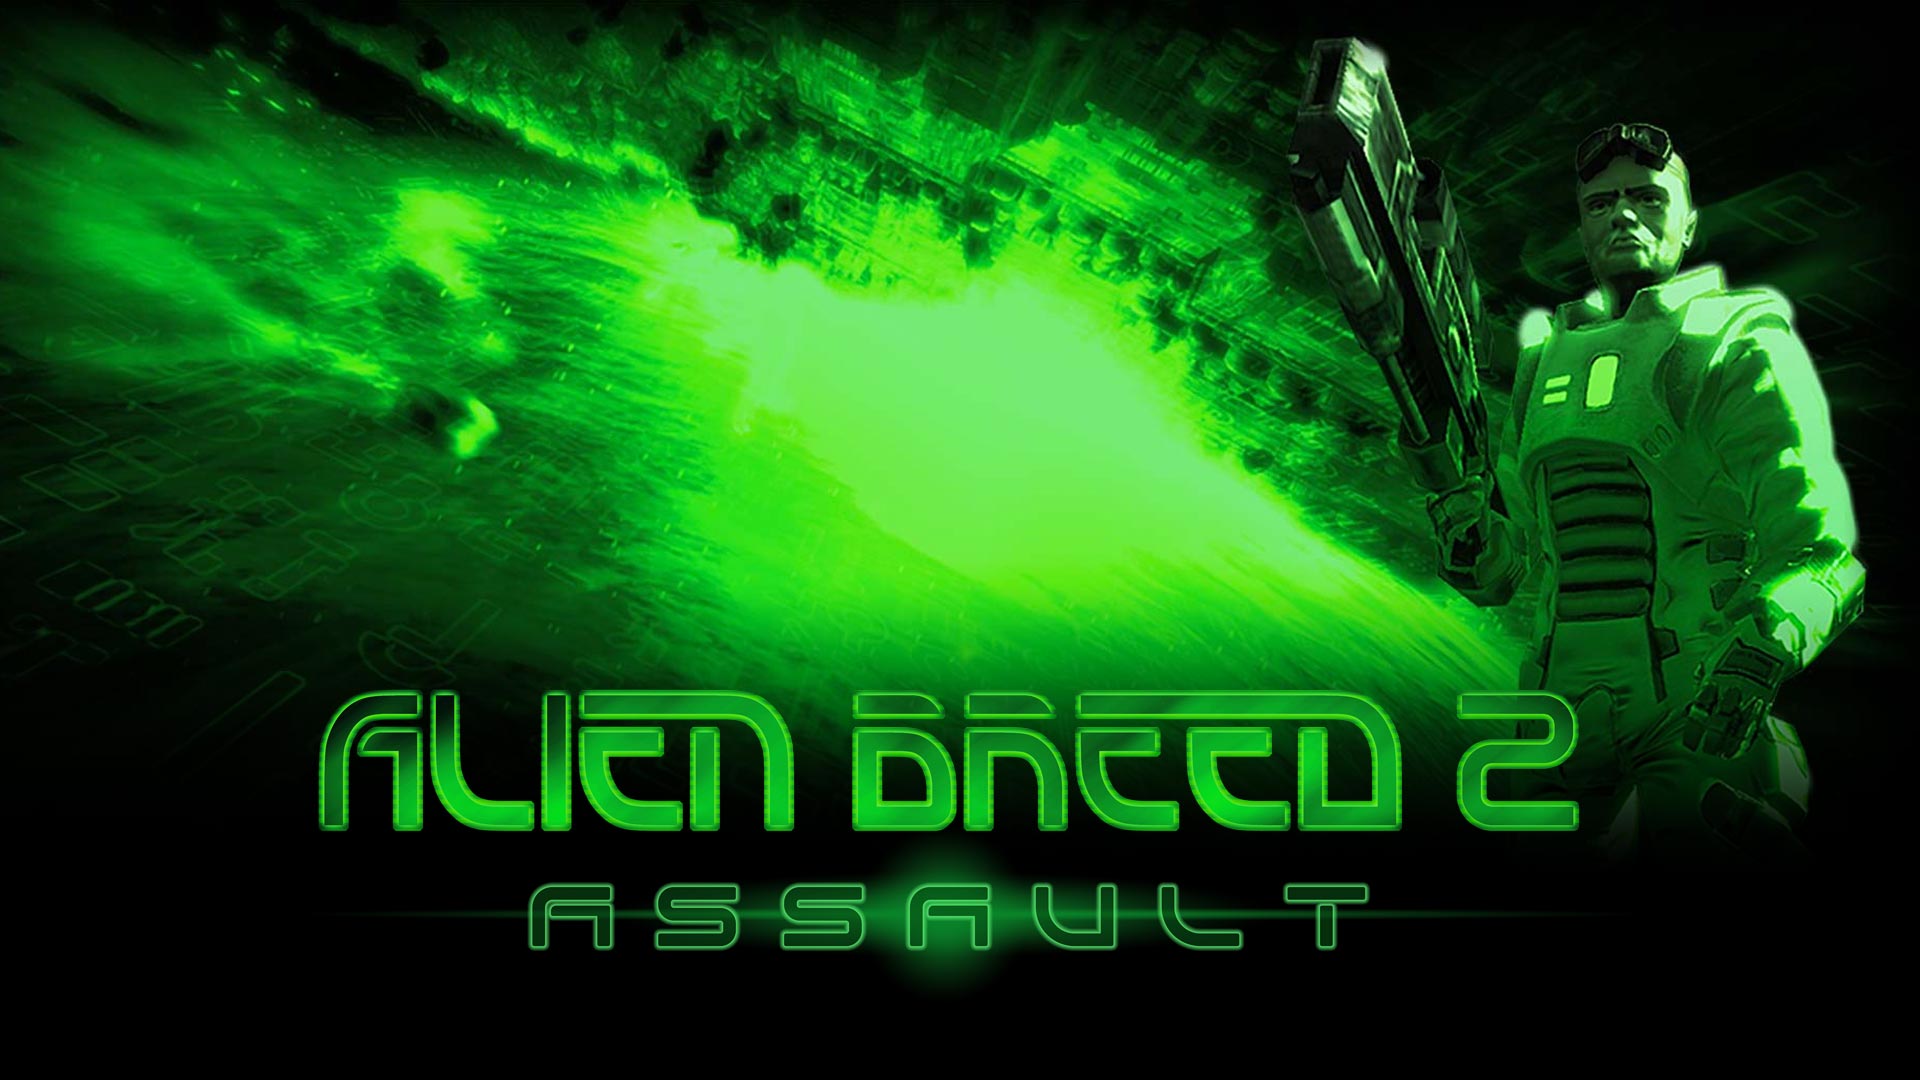 alien-breed-2-assault-team17-group-plc